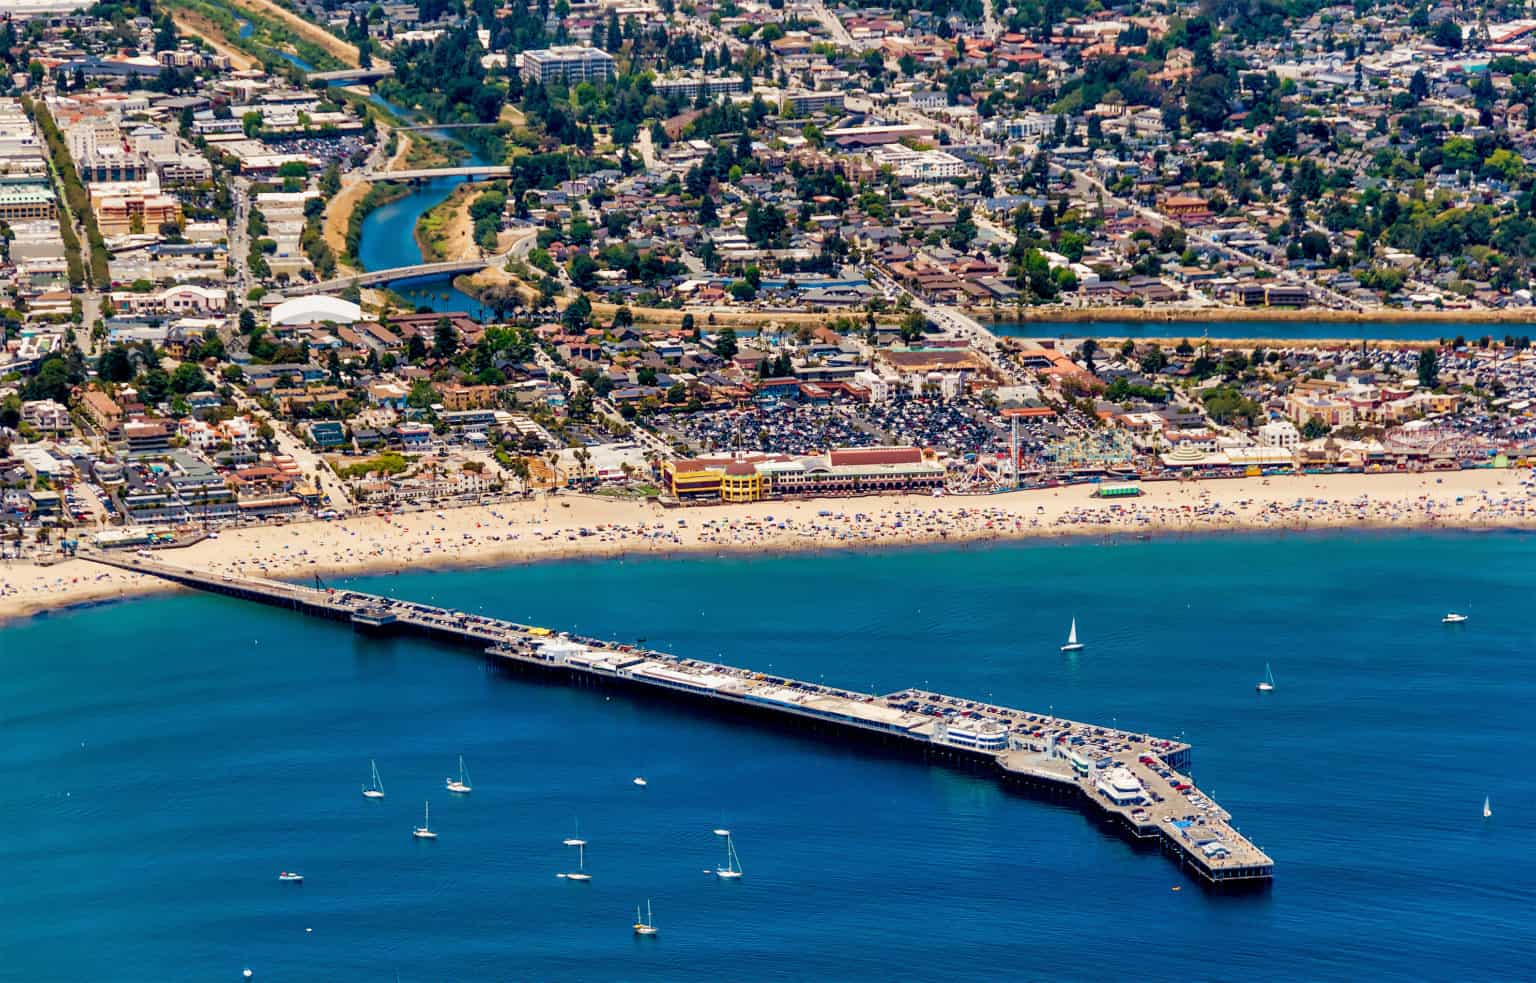 Boardwalk Theme Park, Beach Concerts & Movie Scenes in Santa Cruz